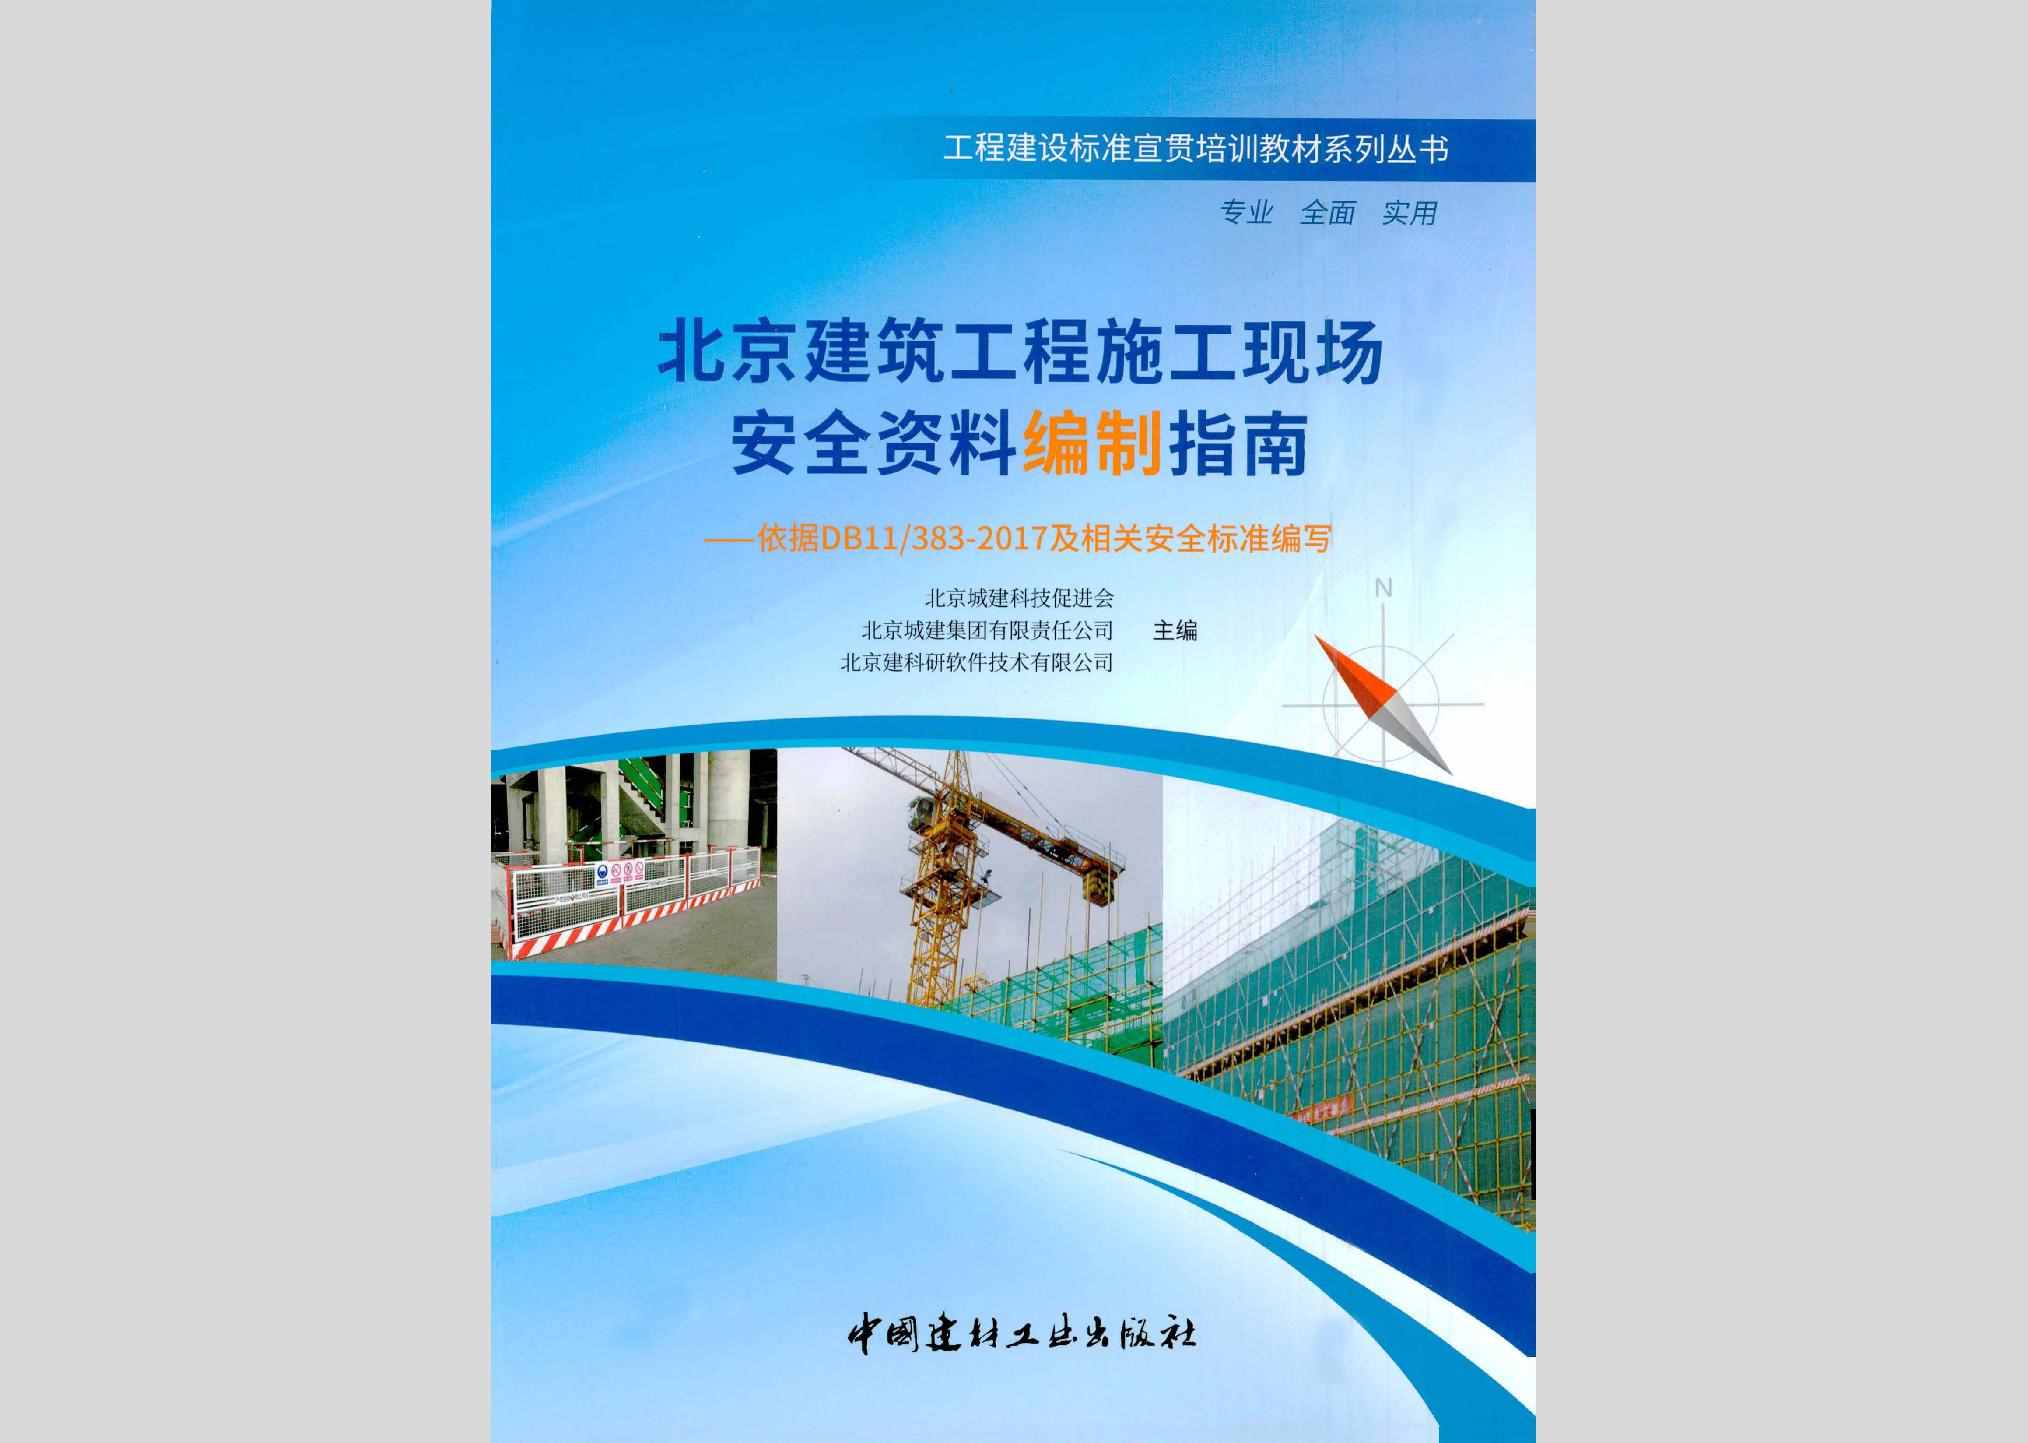 BJJZGCSG：北京建筑工程施工现场安全资料编制指南——依据DB11/383-2017及相关安全标准编写